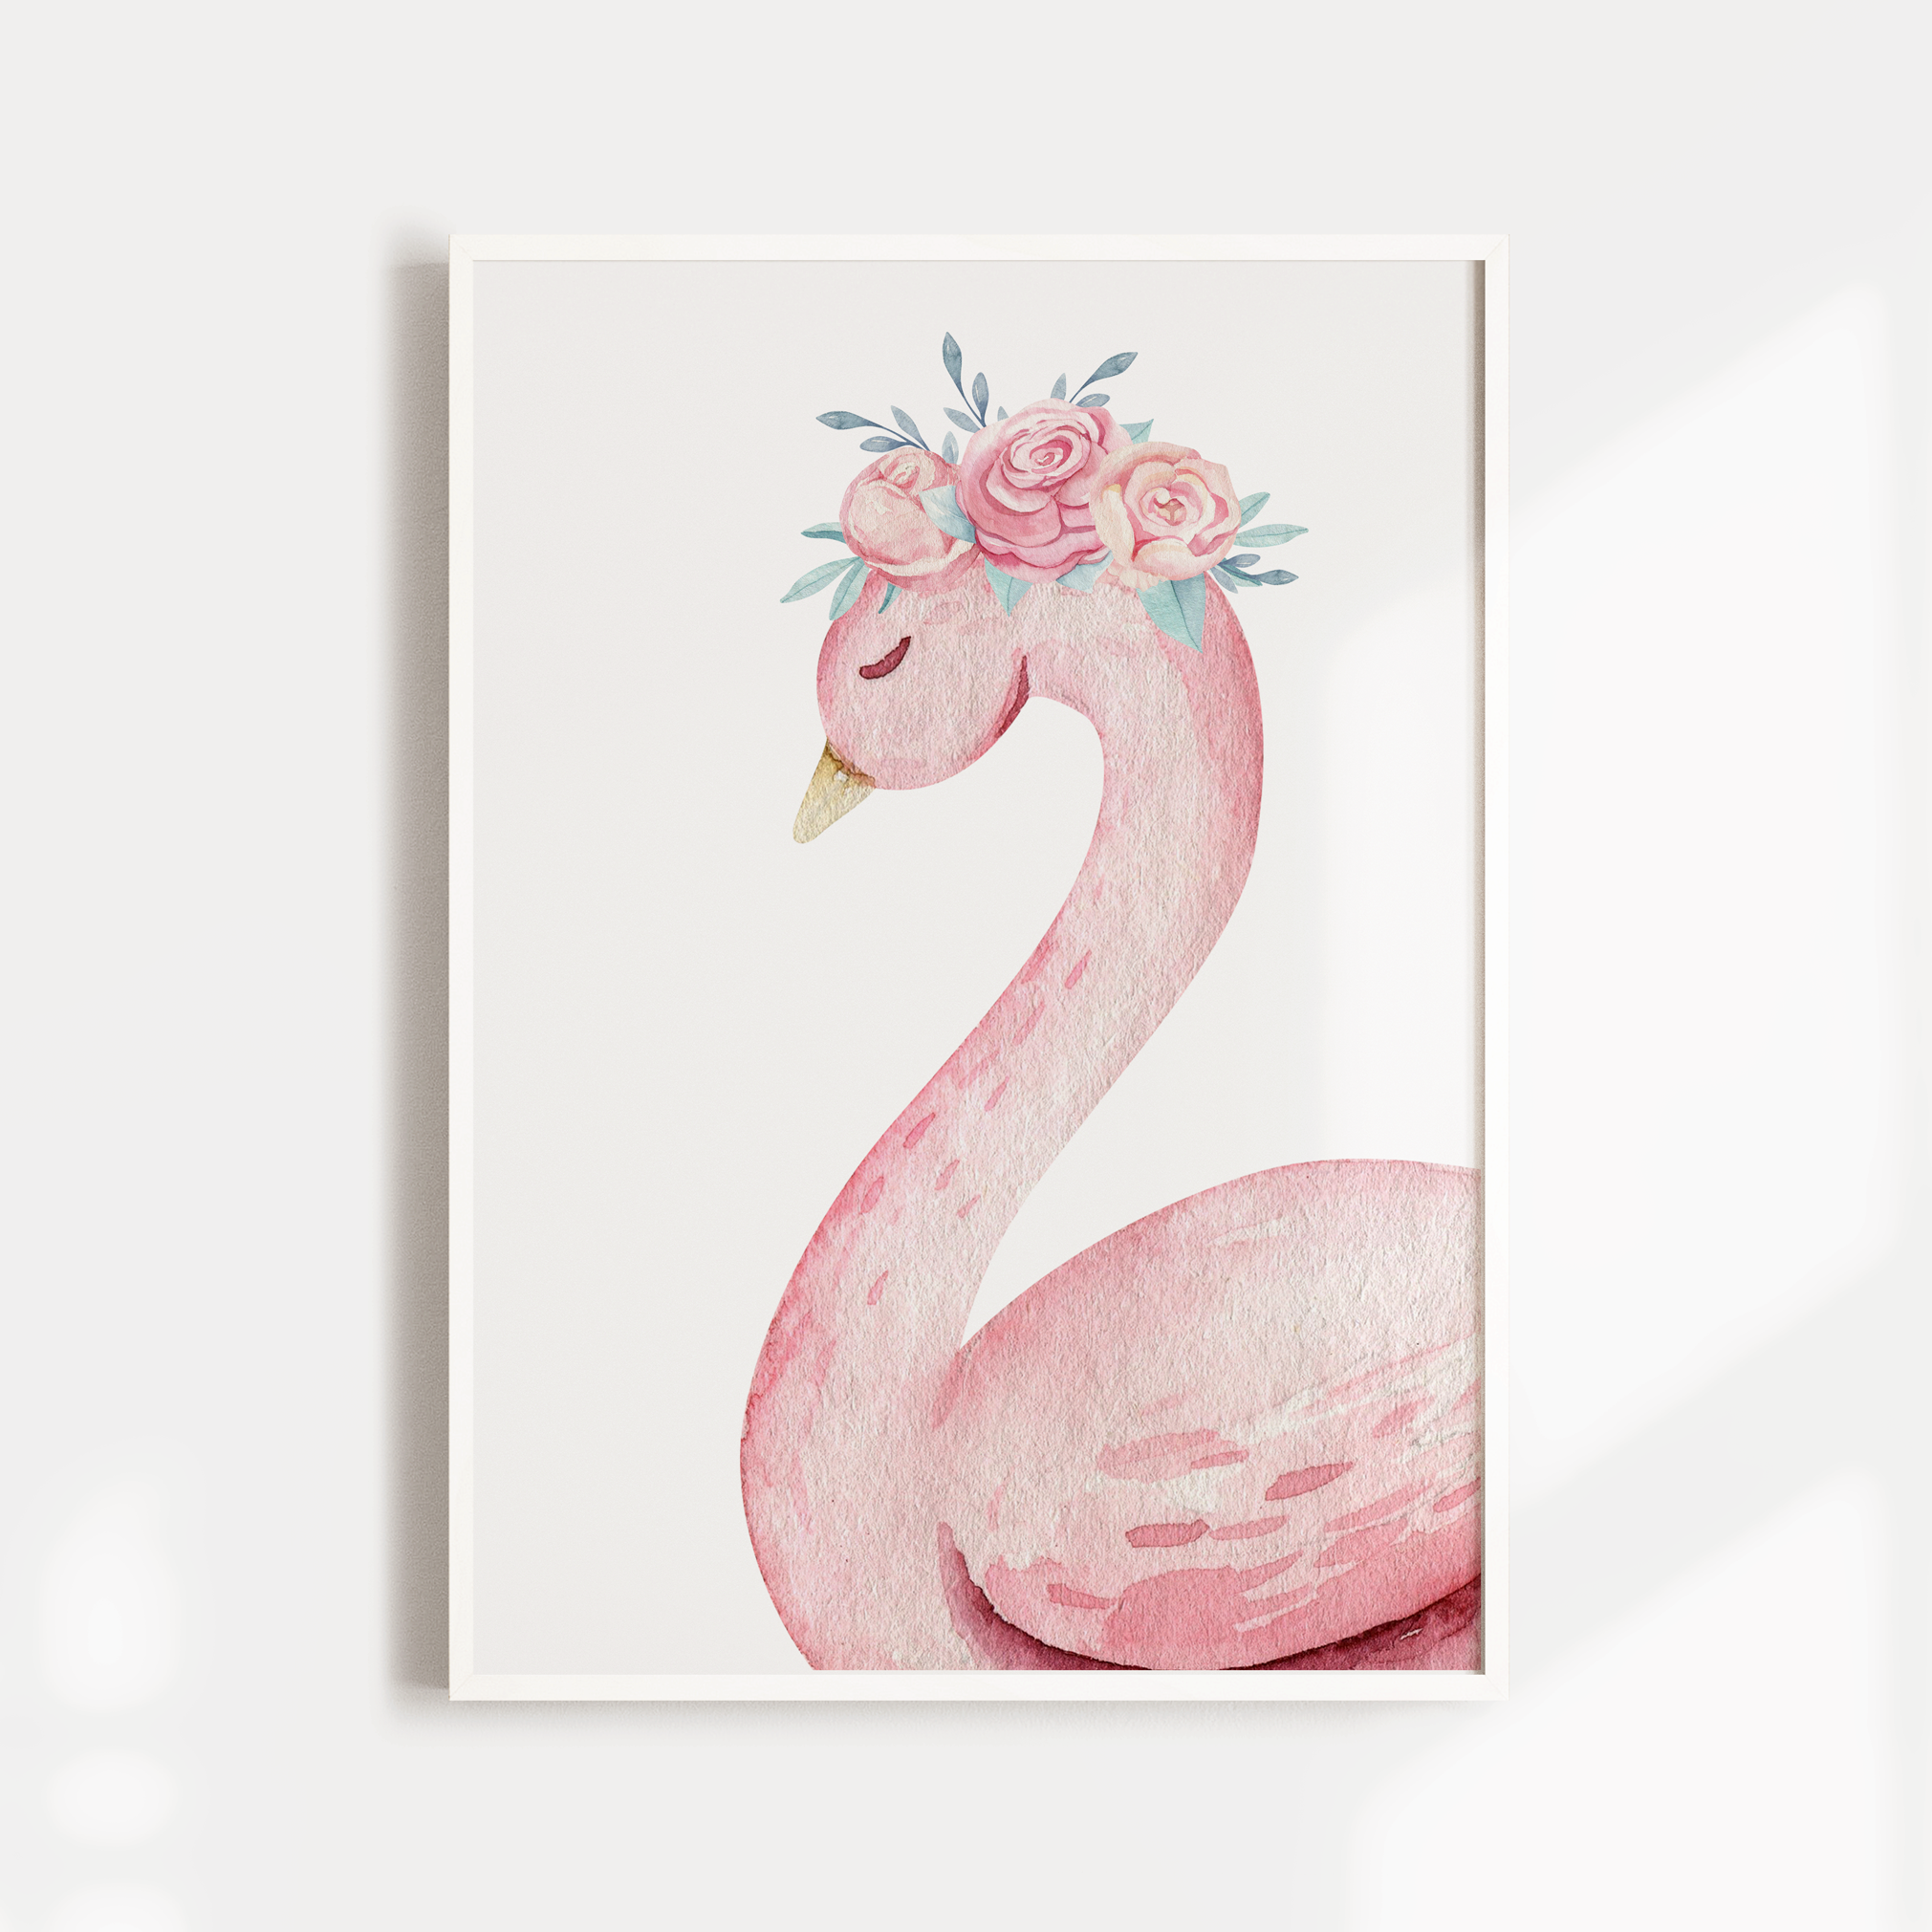 Pink Floral Watercolour Swans & Name Prints